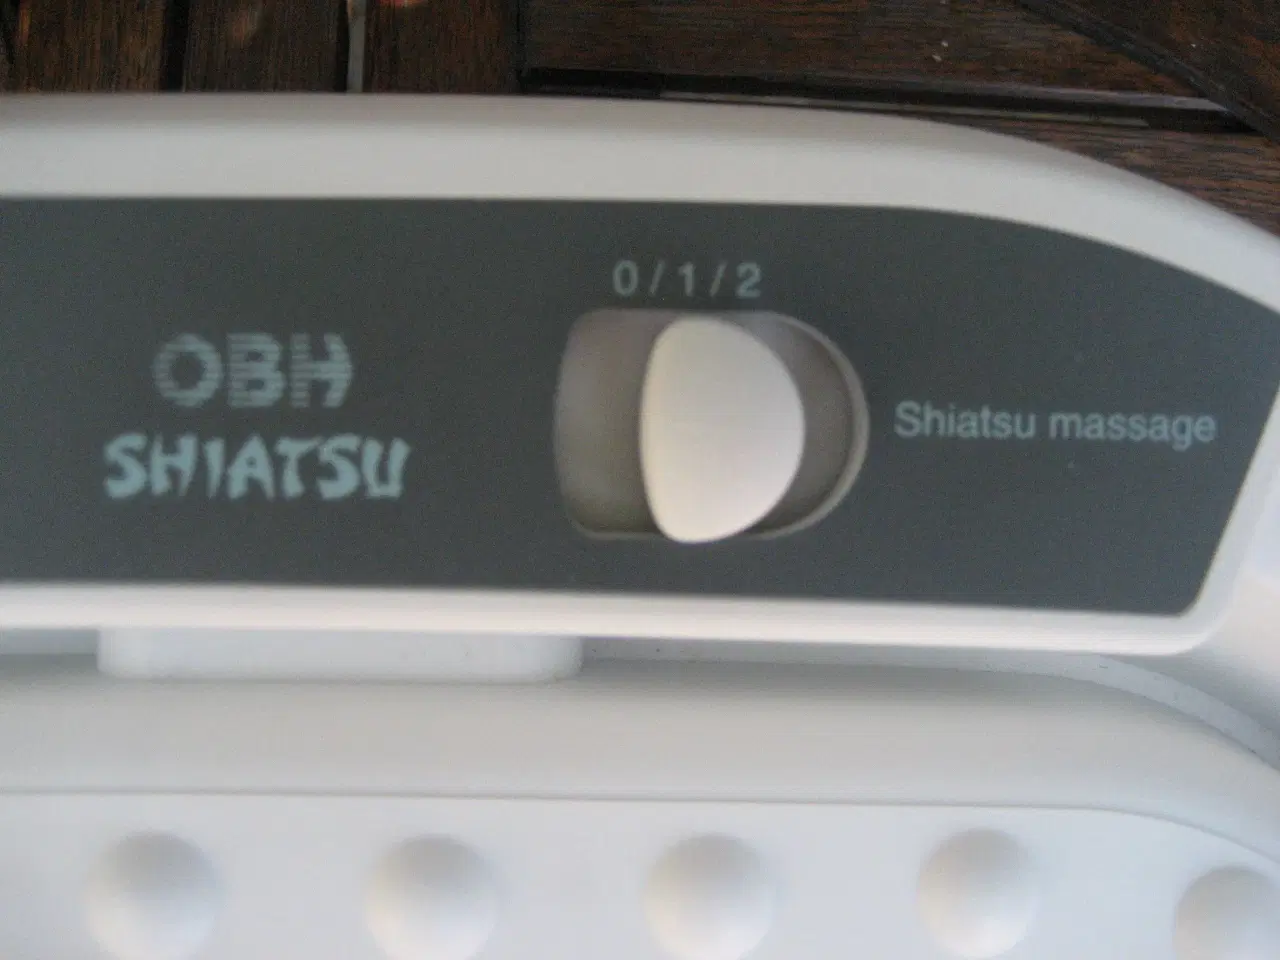 Billede 3 - OBH Shiatsu Fod massage apparat